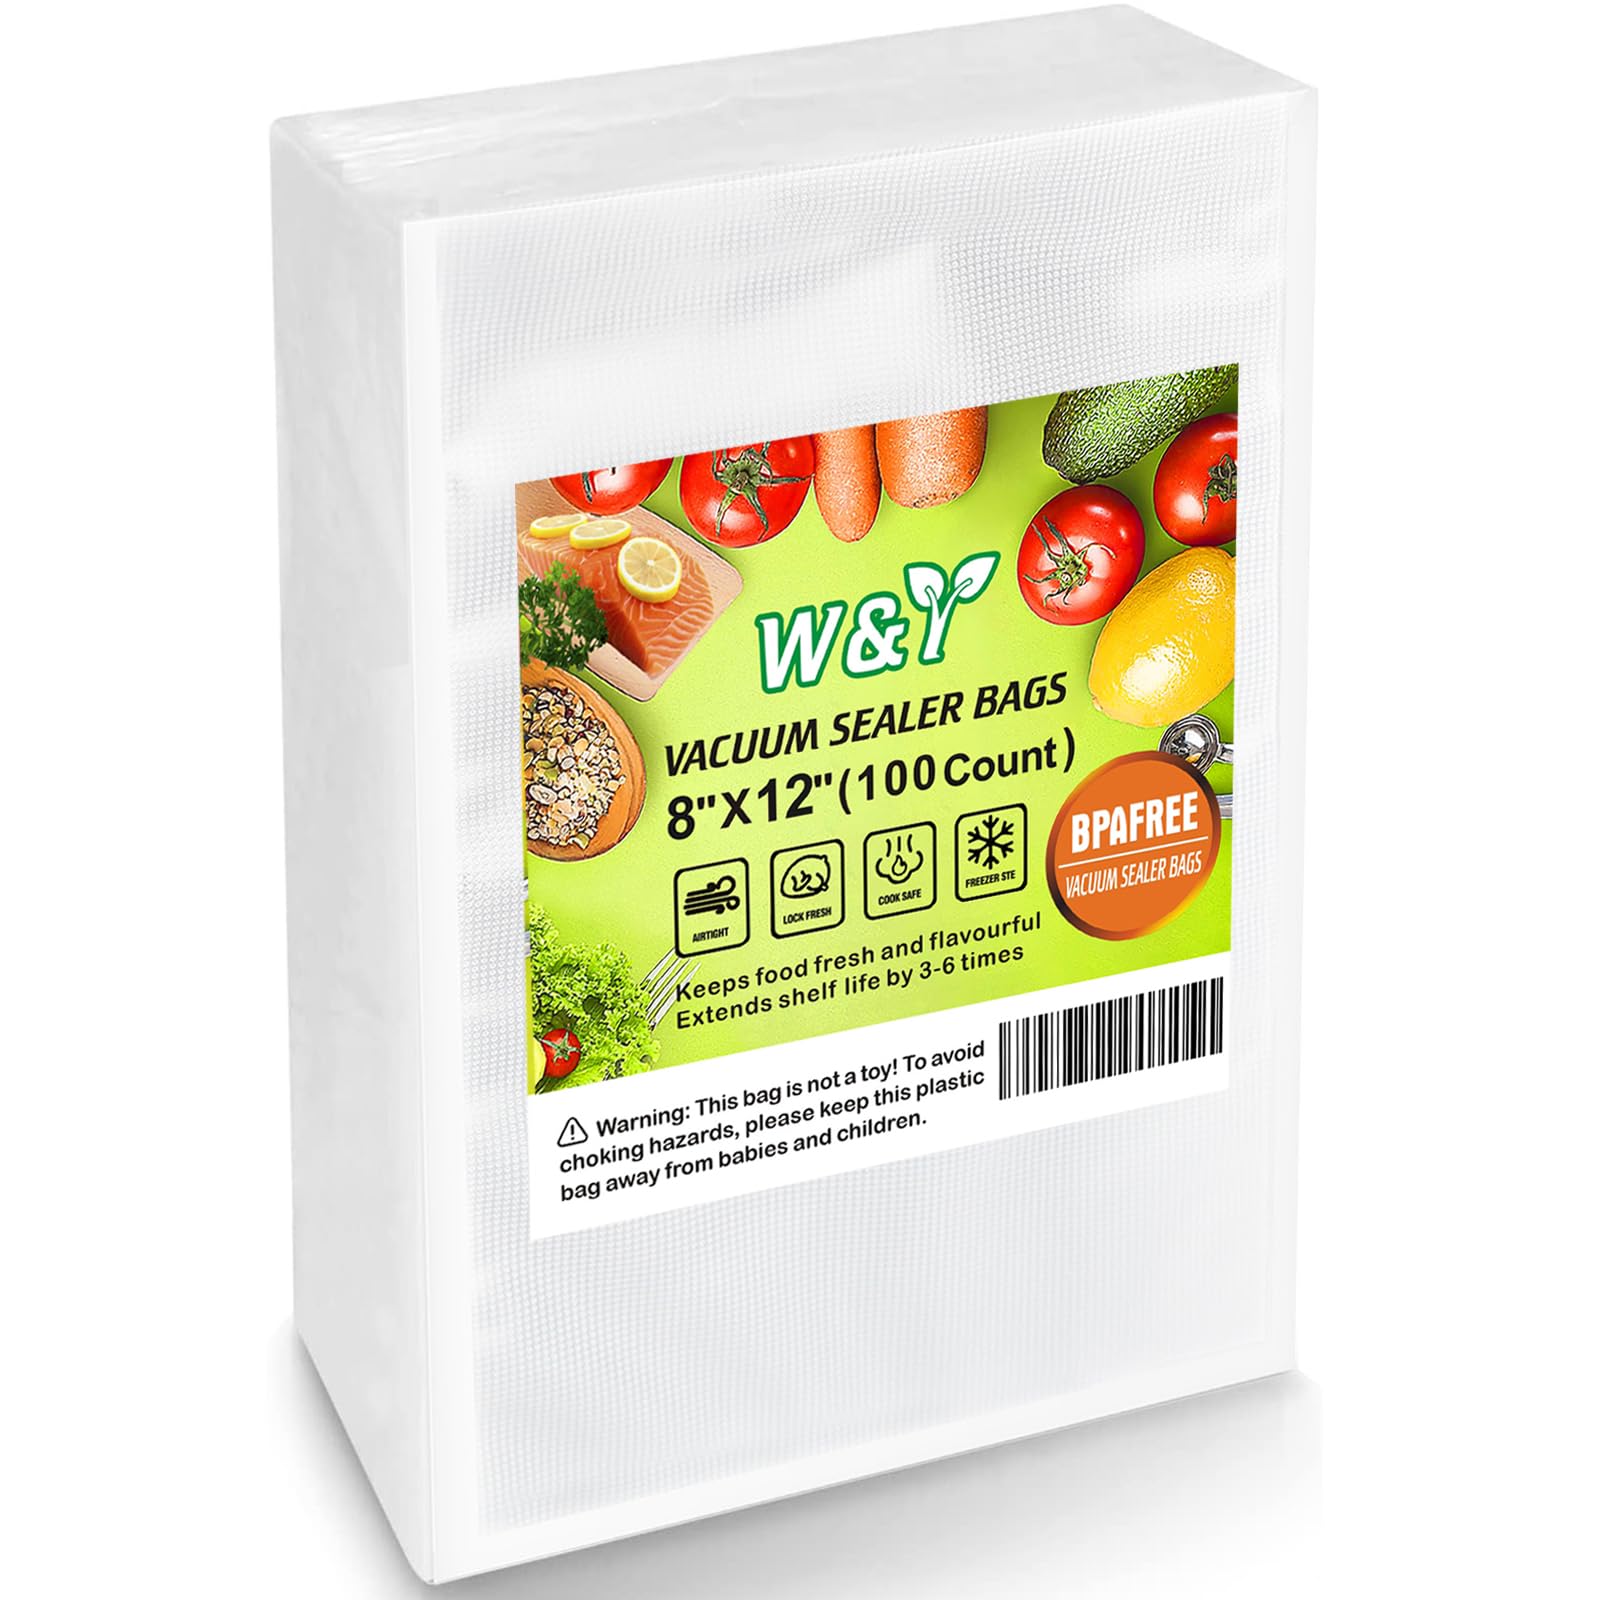 W&Y Vacuum Sealer Bags for Food - 100 Quart, 8" x 12" Commercial Grade Embossed Food Vacuum Bags - Pre-Cut Food Saver Bags for Sous Vide, Meal Prep, and Storage - BPA Free